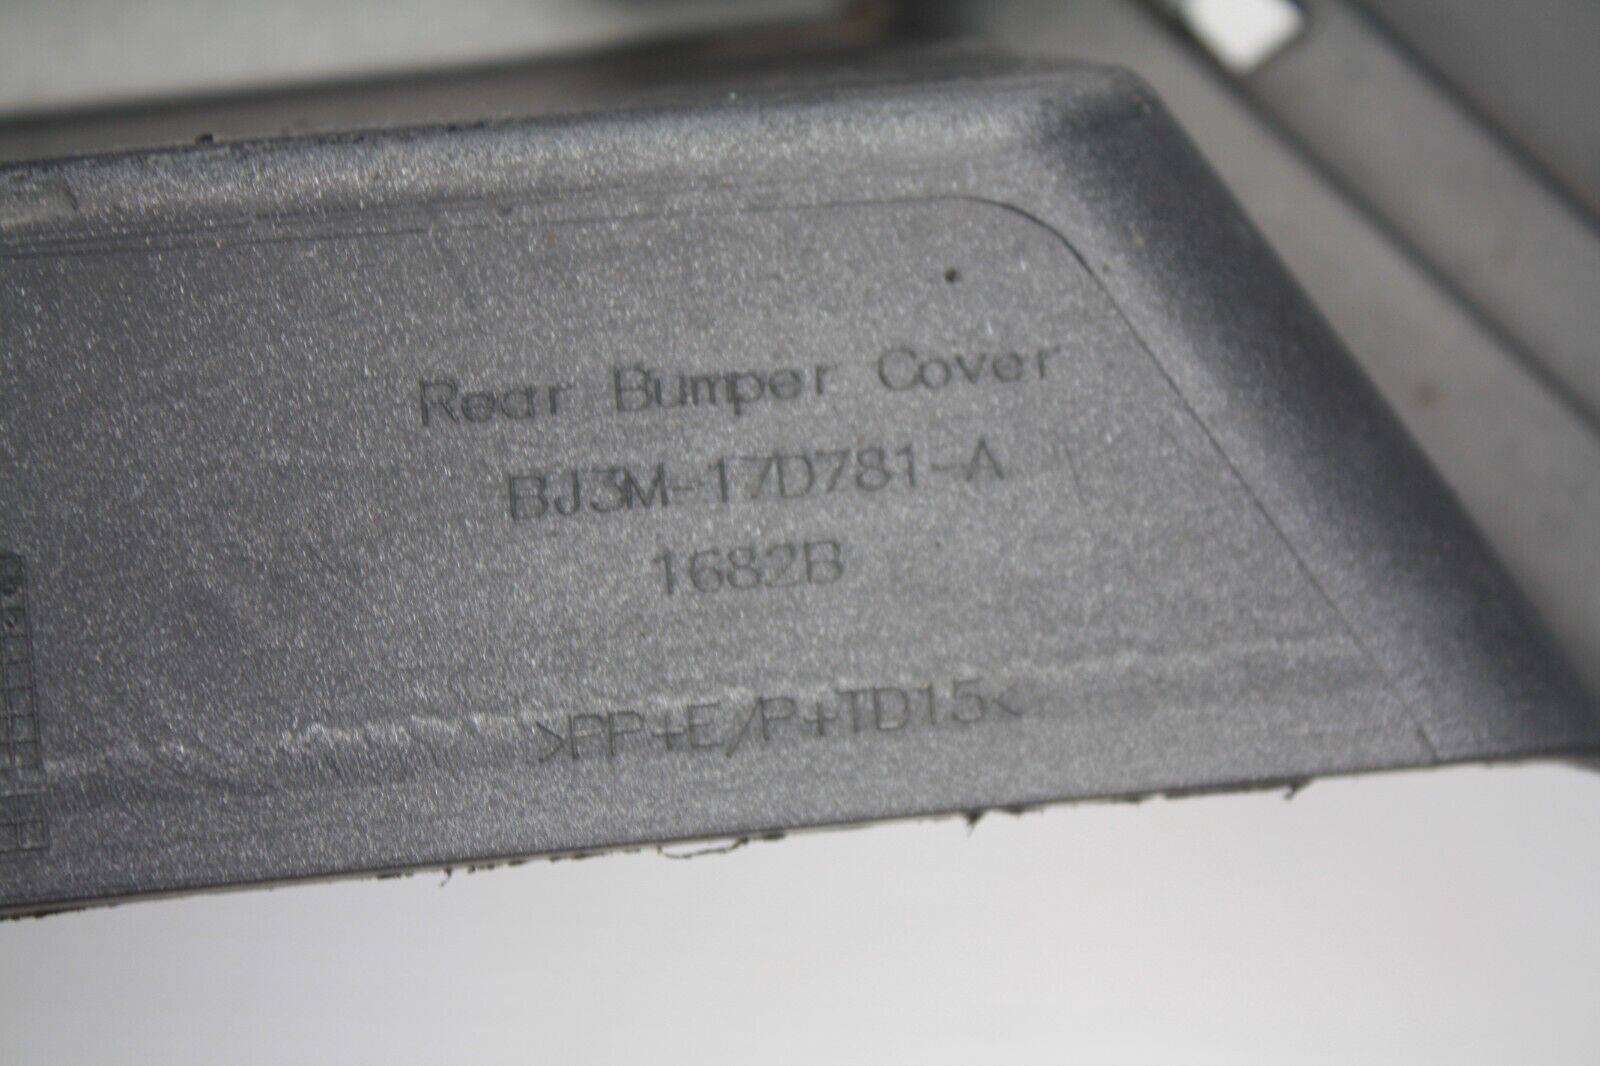 Range-Rover-Evoque-Dynamic-Rear-Bumper-2011-TO-2015-BJ3M-17D781-A-Genuine-175756602951-13